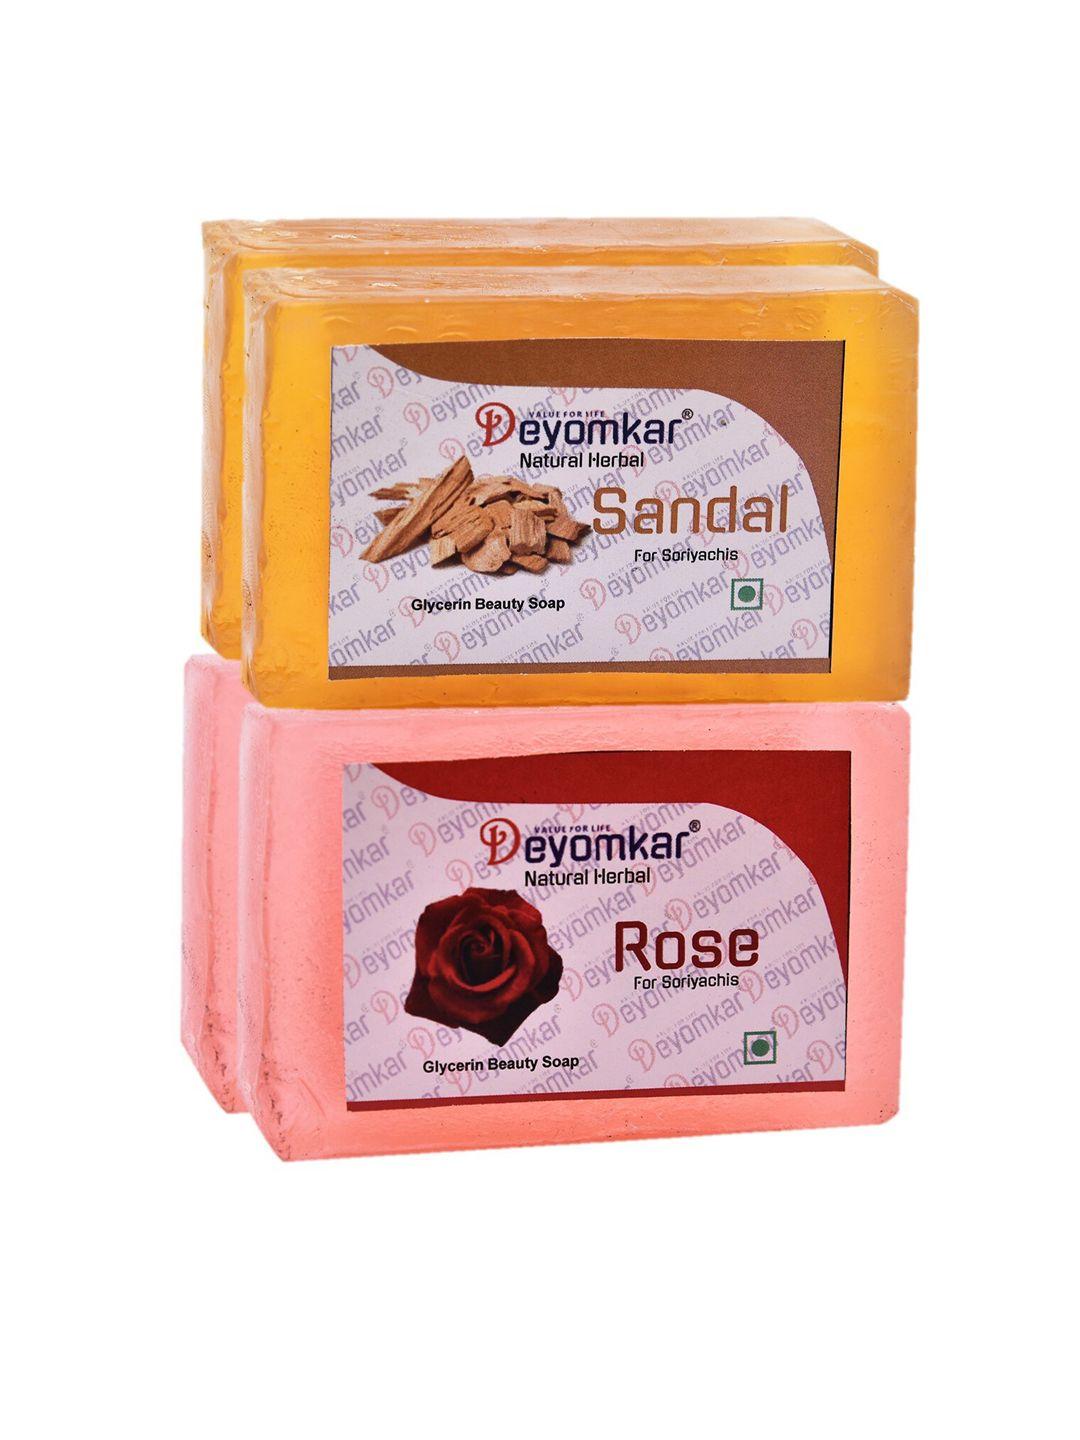 deyomkar pack of 4 herbal glycerin sandalwood & rose soaps